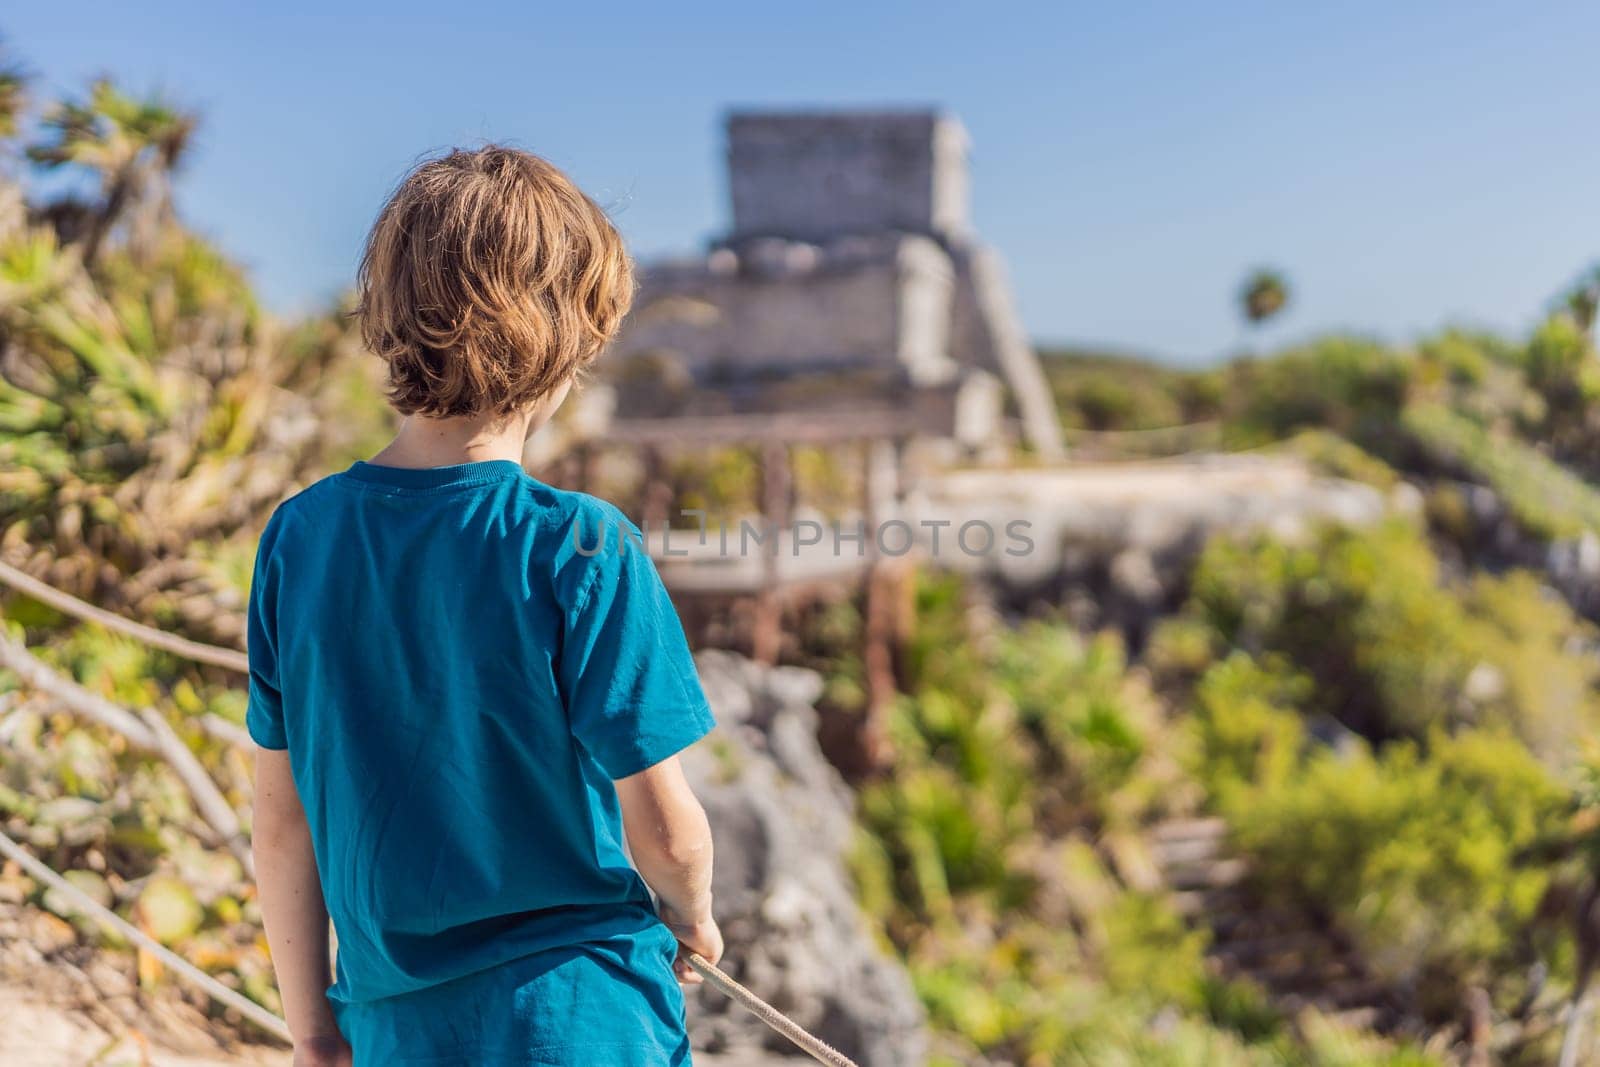 Boy tourist enjoying the view Pre-Columbian Mayan walled city of Tulum, Quintana Roo, Mexico, North America, Tulum, Mexico. El Castillo - castle the Mayan city of Tulum main temple by galitskaya